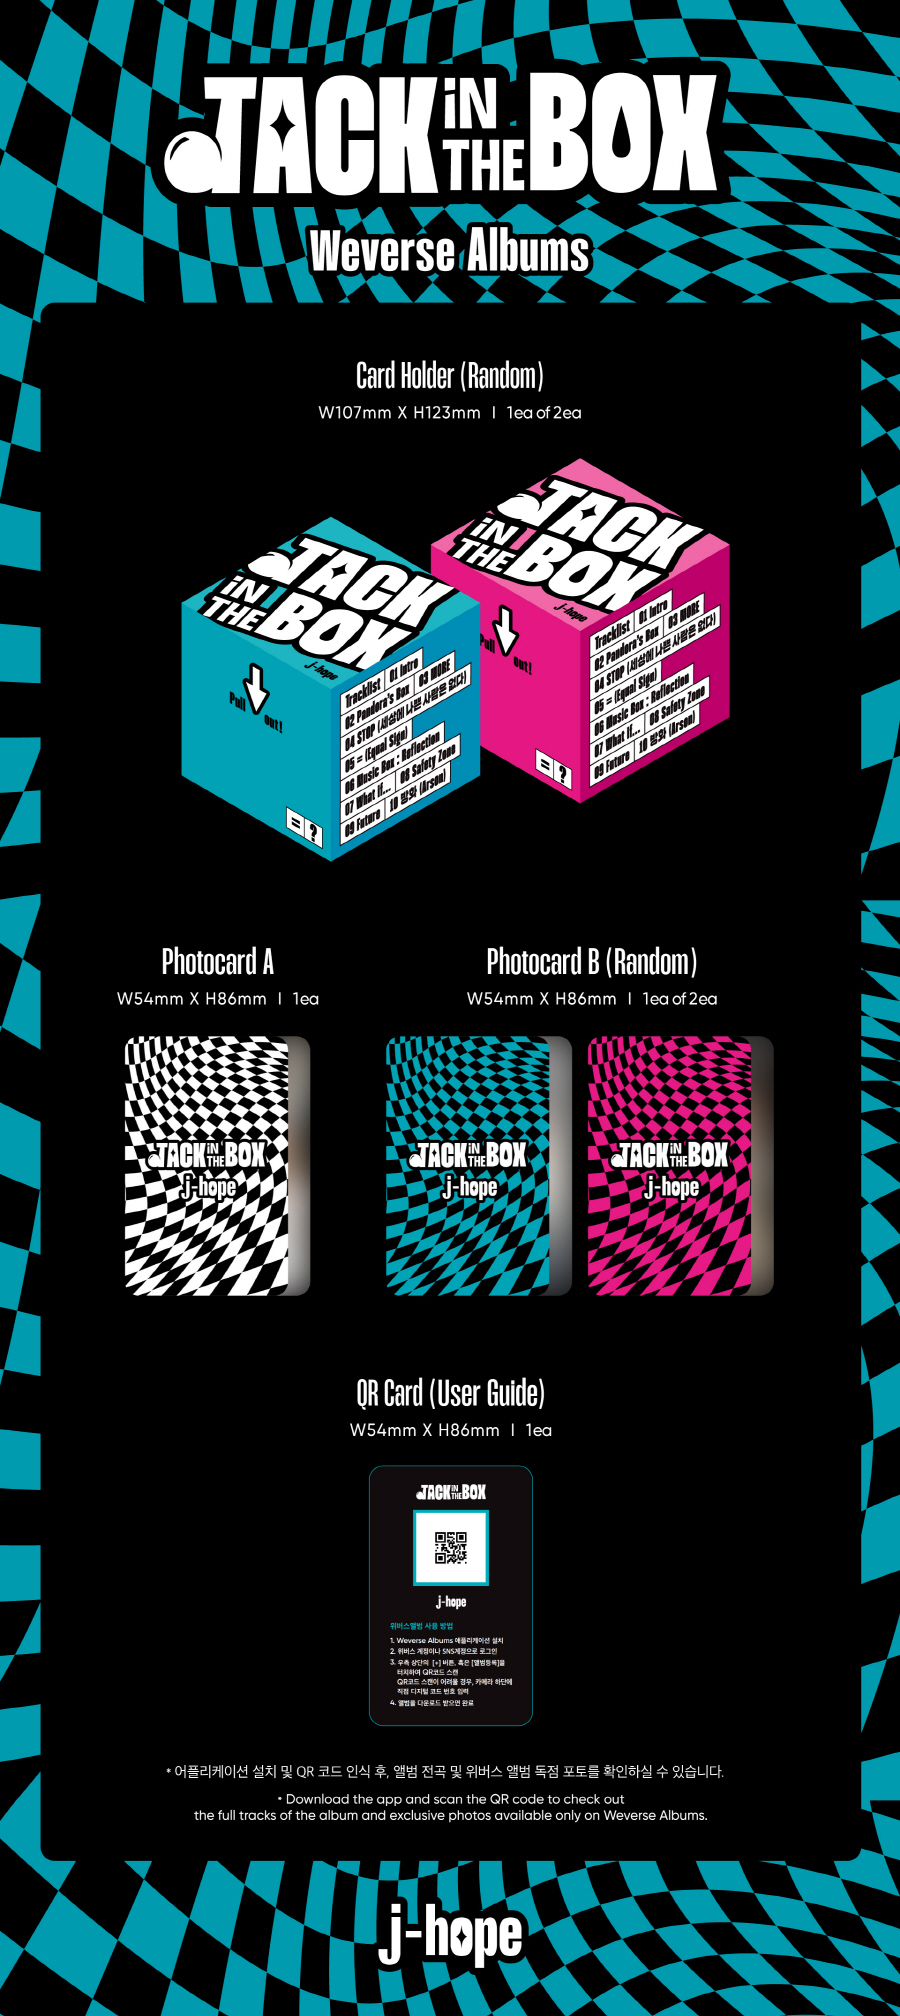 j-hope - Jack In The Box (JackInTheBox Album) [Solo Album] (+Weverse Benefit) bts J-HOPE JACKINTHEBOX SoloAlbum J-hopealbum